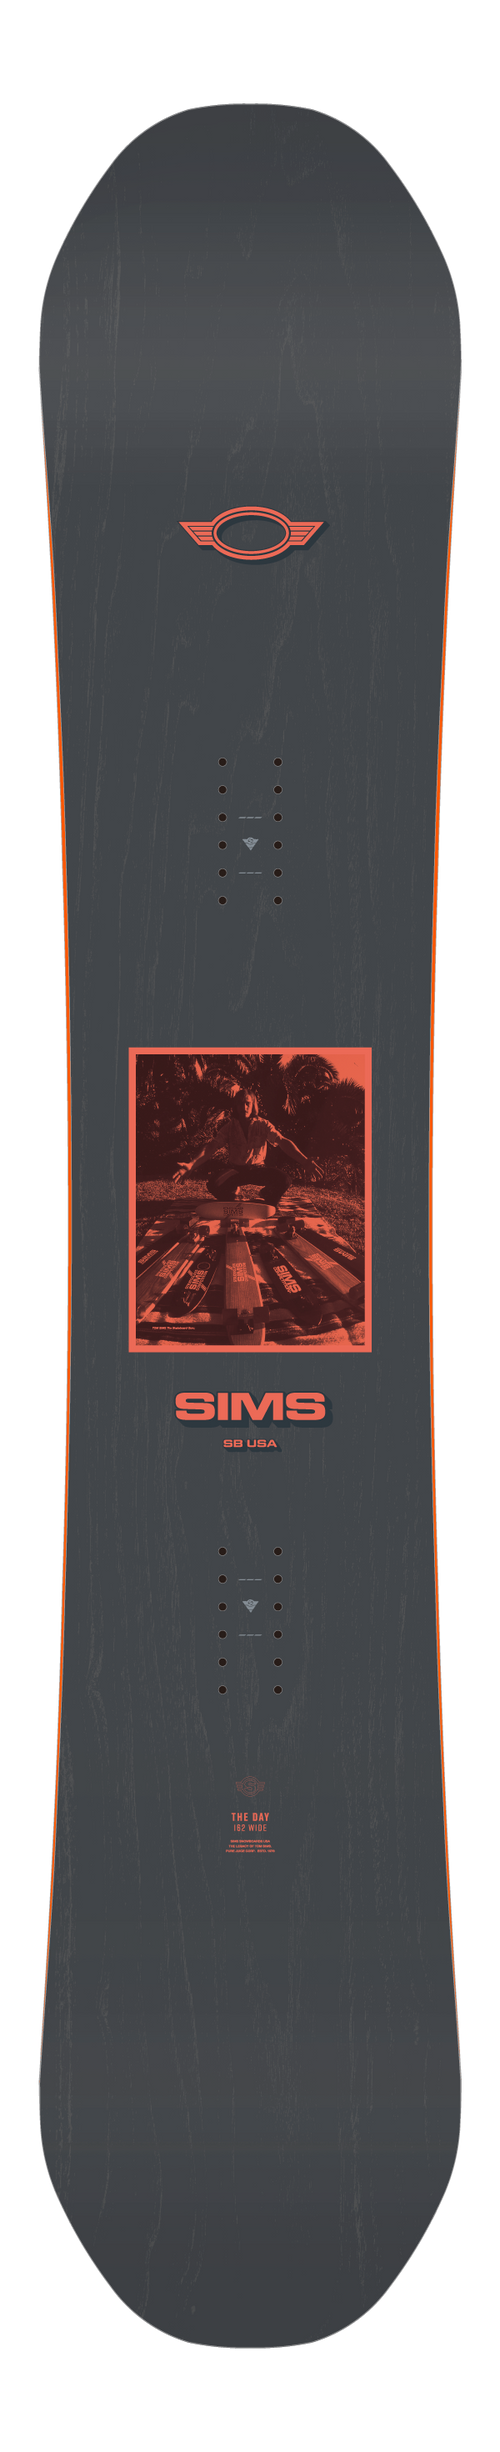 Sims The Day Snowboard 2023 - M I L O S P O R T